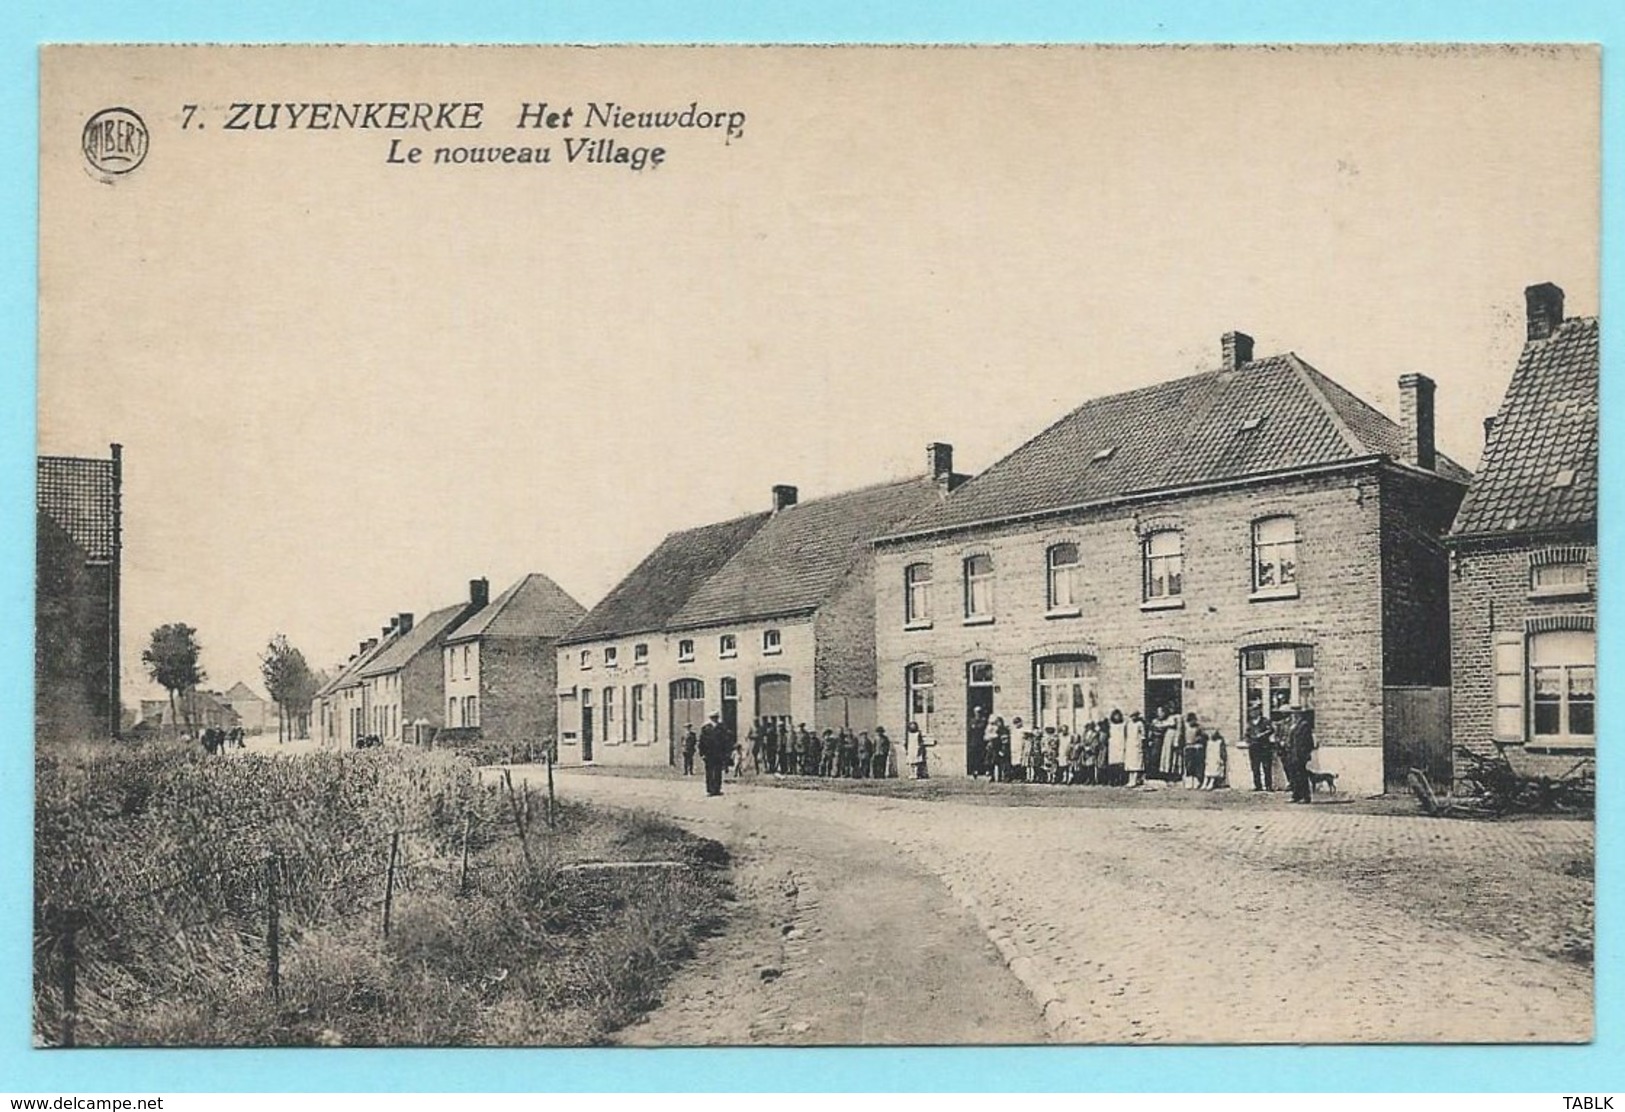 1841 - BELGIE - ZUIENKERKE - HET NIEUWDORP - Zuienkerke